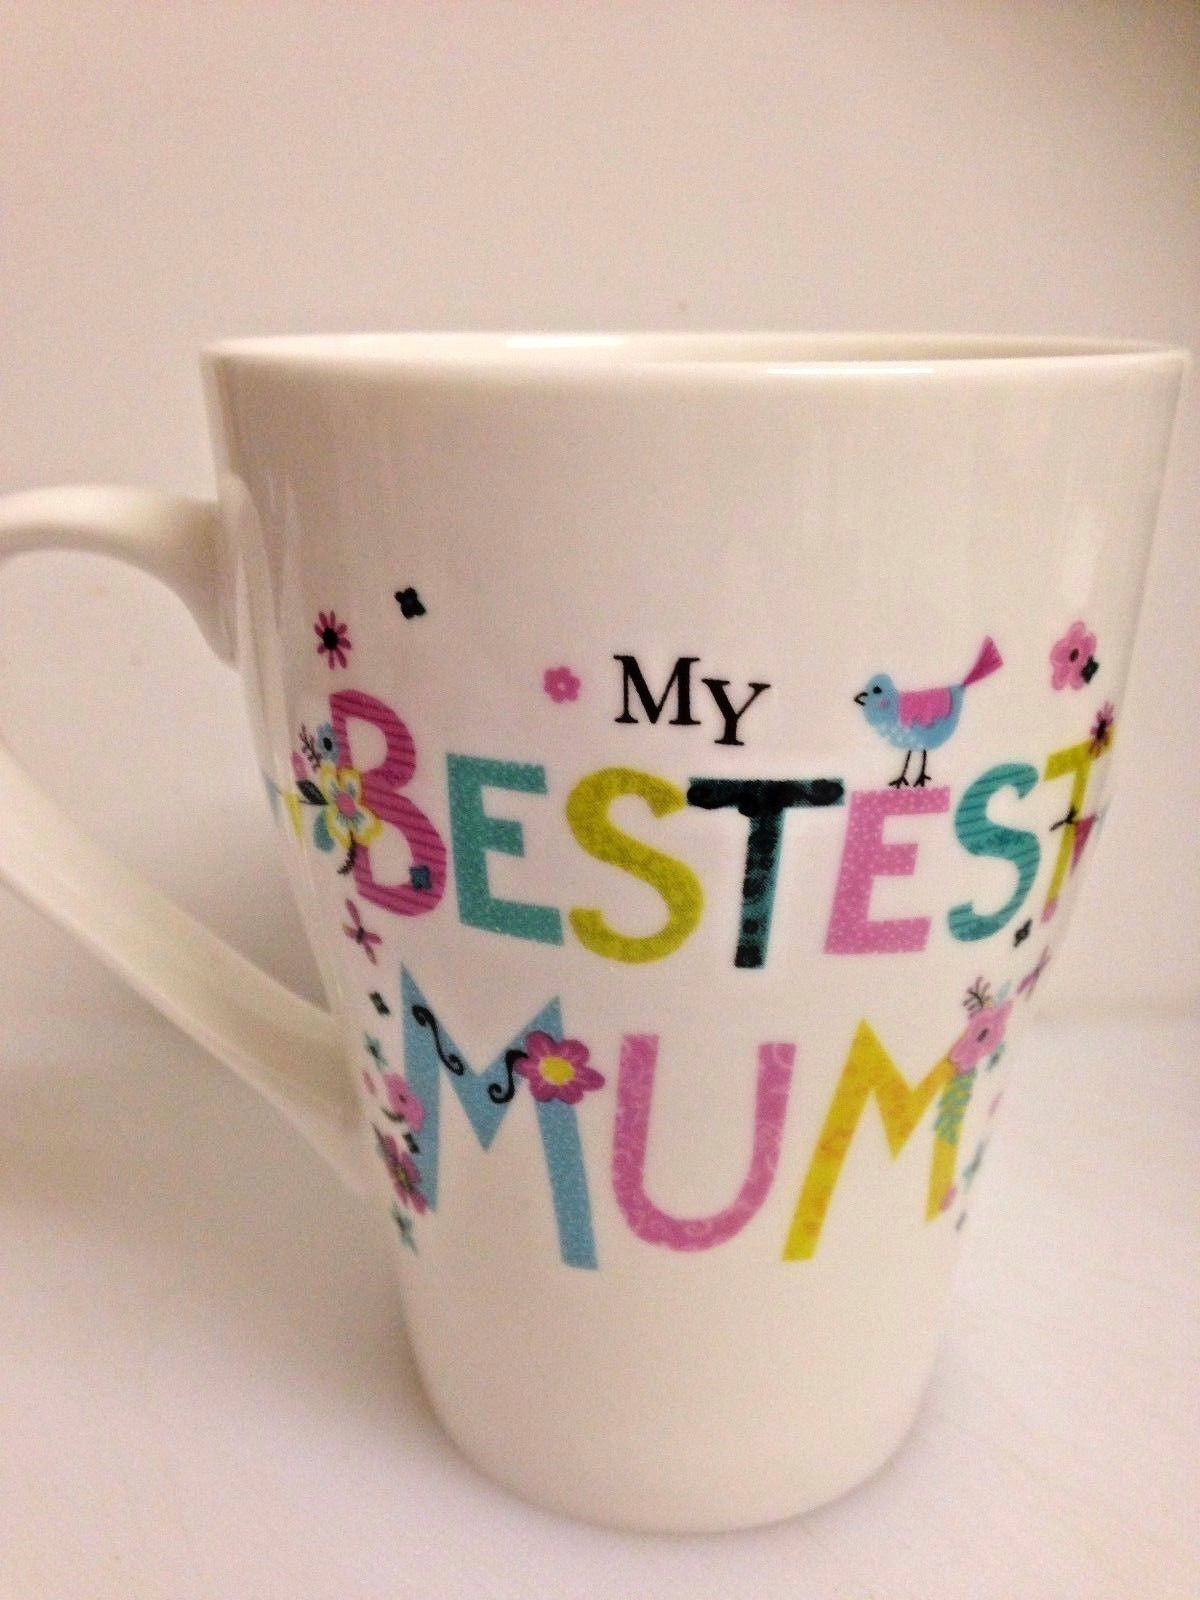 My Bestest Mum Fine China Mug - New - Ideal Mother's Day / Birthday Gift - hanrattycraftsgifts.co.uk